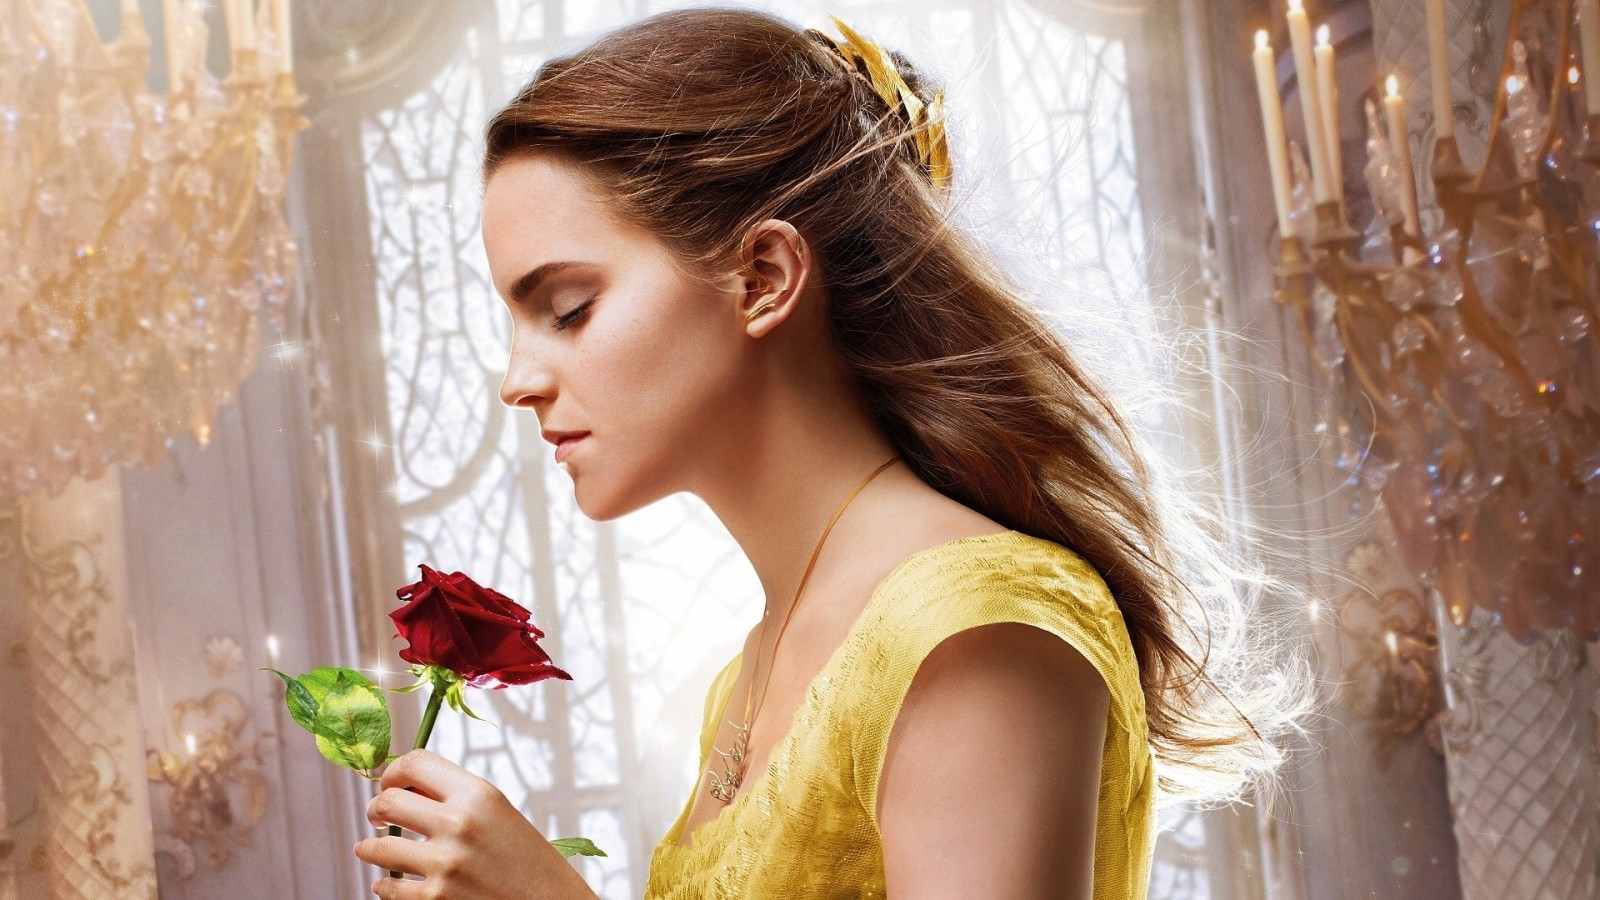 Emma Watson, Beauty And The Beast, Rose, Profile View - Emma Watson Beauty And The Beast Hd , HD Wallpaper & Backgrounds